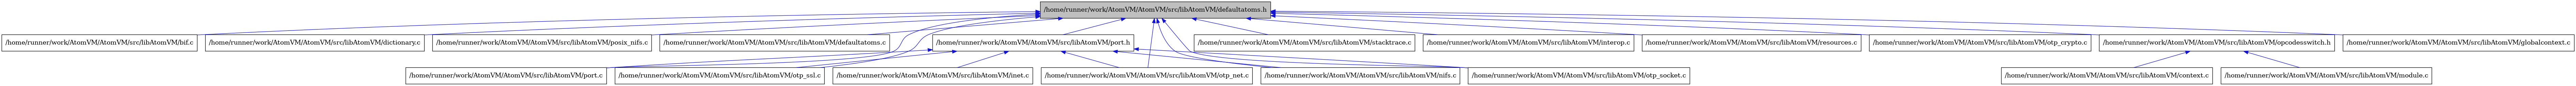 digraph {
    graph [bgcolor="#00000000"]
    node [shape=rectangle style=filled fillcolor="#FFFFFF" font=Helvetica padding=2]
    edge [color="#1414CE"]
    "2" [label="/home/runner/work/AtomVM/AtomVM/src/libAtomVM/bif.c" tooltip="/home/runner/work/AtomVM/AtomVM/src/libAtomVM/bif.c"]
    "4" [label="/home/runner/work/AtomVM/AtomVM/src/libAtomVM/dictionary.c" tooltip="/home/runner/work/AtomVM/AtomVM/src/libAtomVM/dictionary.c"]
    "18" [label="/home/runner/work/AtomVM/AtomVM/src/libAtomVM/posix_nifs.c" tooltip="/home/runner/work/AtomVM/AtomVM/src/libAtomVM/posix_nifs.c"]
    "3" [label="/home/runner/work/AtomVM/AtomVM/src/libAtomVM/defaultatoms.c" tooltip="/home/runner/work/AtomVM/AtomVM/src/libAtomVM/defaultatoms.c"]
    "1" [label="/home/runner/work/AtomVM/AtomVM/src/libAtomVM/defaultatoms.h" tooltip="/home/runner/work/AtomVM/AtomVM/src/libAtomVM/defaultatoms.h" fillcolor="#BFBFBF"]
    "17" [label="/home/runner/work/AtomVM/AtomVM/src/libAtomVM/inet.c" tooltip="/home/runner/work/AtomVM/AtomVM/src/libAtomVM/inet.c"]
    "9" [label="/home/runner/work/AtomVM/AtomVM/src/libAtomVM/context.c" tooltip="/home/runner/work/AtomVM/AtomVM/src/libAtomVM/context.c"]
    "15" [label="/home/runner/work/AtomVM/AtomVM/src/libAtomVM/port.c" tooltip="/home/runner/work/AtomVM/AtomVM/src/libAtomVM/port.c"]
    "16" [label="/home/runner/work/AtomVM/AtomVM/src/libAtomVM/port.h" tooltip="/home/runner/work/AtomVM/AtomVM/src/libAtomVM/port.h"]
    "20" [label="/home/runner/work/AtomVM/AtomVM/src/libAtomVM/stacktrace.c" tooltip="/home/runner/work/AtomVM/AtomVM/src/libAtomVM/stacktrace.c"]
    "10" [label="/home/runner/work/AtomVM/AtomVM/src/libAtomVM/module.c" tooltip="/home/runner/work/AtomVM/AtomVM/src/libAtomVM/module.c"]
    "6" [label="/home/runner/work/AtomVM/AtomVM/src/libAtomVM/interop.c" tooltip="/home/runner/work/AtomVM/AtomVM/src/libAtomVM/interop.c"]
    "14" [label="/home/runner/work/AtomVM/AtomVM/src/libAtomVM/otp_ssl.c" tooltip="/home/runner/work/AtomVM/AtomVM/src/libAtomVM/otp_ssl.c"]
    "19" [label="/home/runner/work/AtomVM/AtomVM/src/libAtomVM/resources.c" tooltip="/home/runner/work/AtomVM/AtomVM/src/libAtomVM/resources.c"]
    "11" [label="/home/runner/work/AtomVM/AtomVM/src/libAtomVM/otp_crypto.c" tooltip="/home/runner/work/AtomVM/AtomVM/src/libAtomVM/otp_crypto.c"]
    "12" [label="/home/runner/work/AtomVM/AtomVM/src/libAtomVM/otp_net.c" tooltip="/home/runner/work/AtomVM/AtomVM/src/libAtomVM/otp_net.c"]
    "7" [label="/home/runner/work/AtomVM/AtomVM/src/libAtomVM/nifs.c" tooltip="/home/runner/work/AtomVM/AtomVM/src/libAtomVM/nifs.c"]
    "8" [label="/home/runner/work/AtomVM/AtomVM/src/libAtomVM/opcodesswitch.h" tooltip="/home/runner/work/AtomVM/AtomVM/src/libAtomVM/opcodesswitch.h"]
    "5" [label="/home/runner/work/AtomVM/AtomVM/src/libAtomVM/globalcontext.c" tooltip="/home/runner/work/AtomVM/AtomVM/src/libAtomVM/globalcontext.c"]
    "13" [label="/home/runner/work/AtomVM/AtomVM/src/libAtomVM/otp_socket.c" tooltip="/home/runner/work/AtomVM/AtomVM/src/libAtomVM/otp_socket.c"]
    "1" -> "2" [dir=back tooltip="include"]
    "1" -> "3" [dir=back tooltip="include"]
    "1" -> "4" [dir=back tooltip="include"]
    "1" -> "5" [dir=back tooltip="include"]
    "1" -> "6" [dir=back tooltip="include"]
    "1" -> "7" [dir=back tooltip="include"]
    "1" -> "8" [dir=back tooltip="include"]
    "1" -> "11" [dir=back tooltip="include"]
    "1" -> "12" [dir=back tooltip="include"]
    "1" -> "13" [dir=back tooltip="include"]
    "1" -> "14" [dir=back tooltip="include"]
    "1" -> "15" [dir=back tooltip="include"]
    "1" -> "16" [dir=back tooltip="include"]
    "1" -> "18" [dir=back tooltip="include"]
    "1" -> "19" [dir=back tooltip="include"]
    "1" -> "20" [dir=back tooltip="include"]
    "16" -> "17" [dir=back tooltip="include"]
    "16" -> "7" [dir=back tooltip="include"]
    "16" -> "12" [dir=back tooltip="include"]
    "16" -> "13" [dir=back tooltip="include"]
    "16" -> "14" [dir=back tooltip="include"]
    "16" -> "15" [dir=back tooltip="include"]
    "8" -> "9" [dir=back tooltip="include"]
    "8" -> "10" [dir=back tooltip="include"]
}